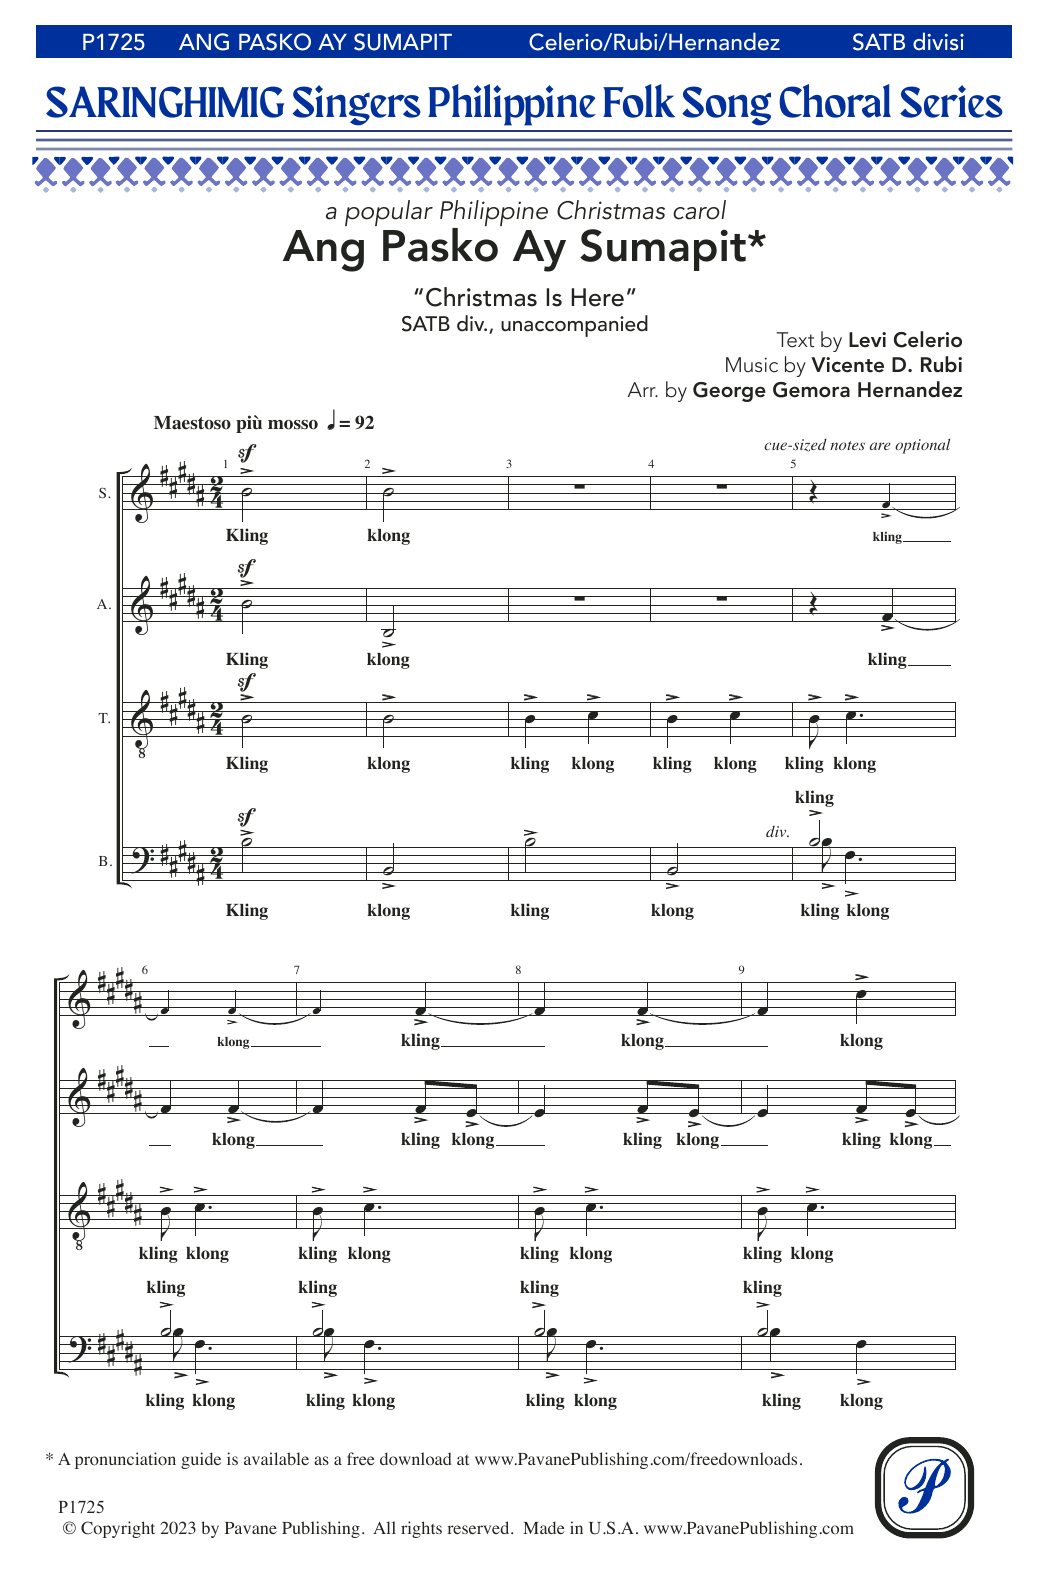 George Gemora Hernandez Ang Pasko Ay Sumapit (Christmas Is Here) Sheet Music Notes & Chords for SATB Choir - Download or Print PDF